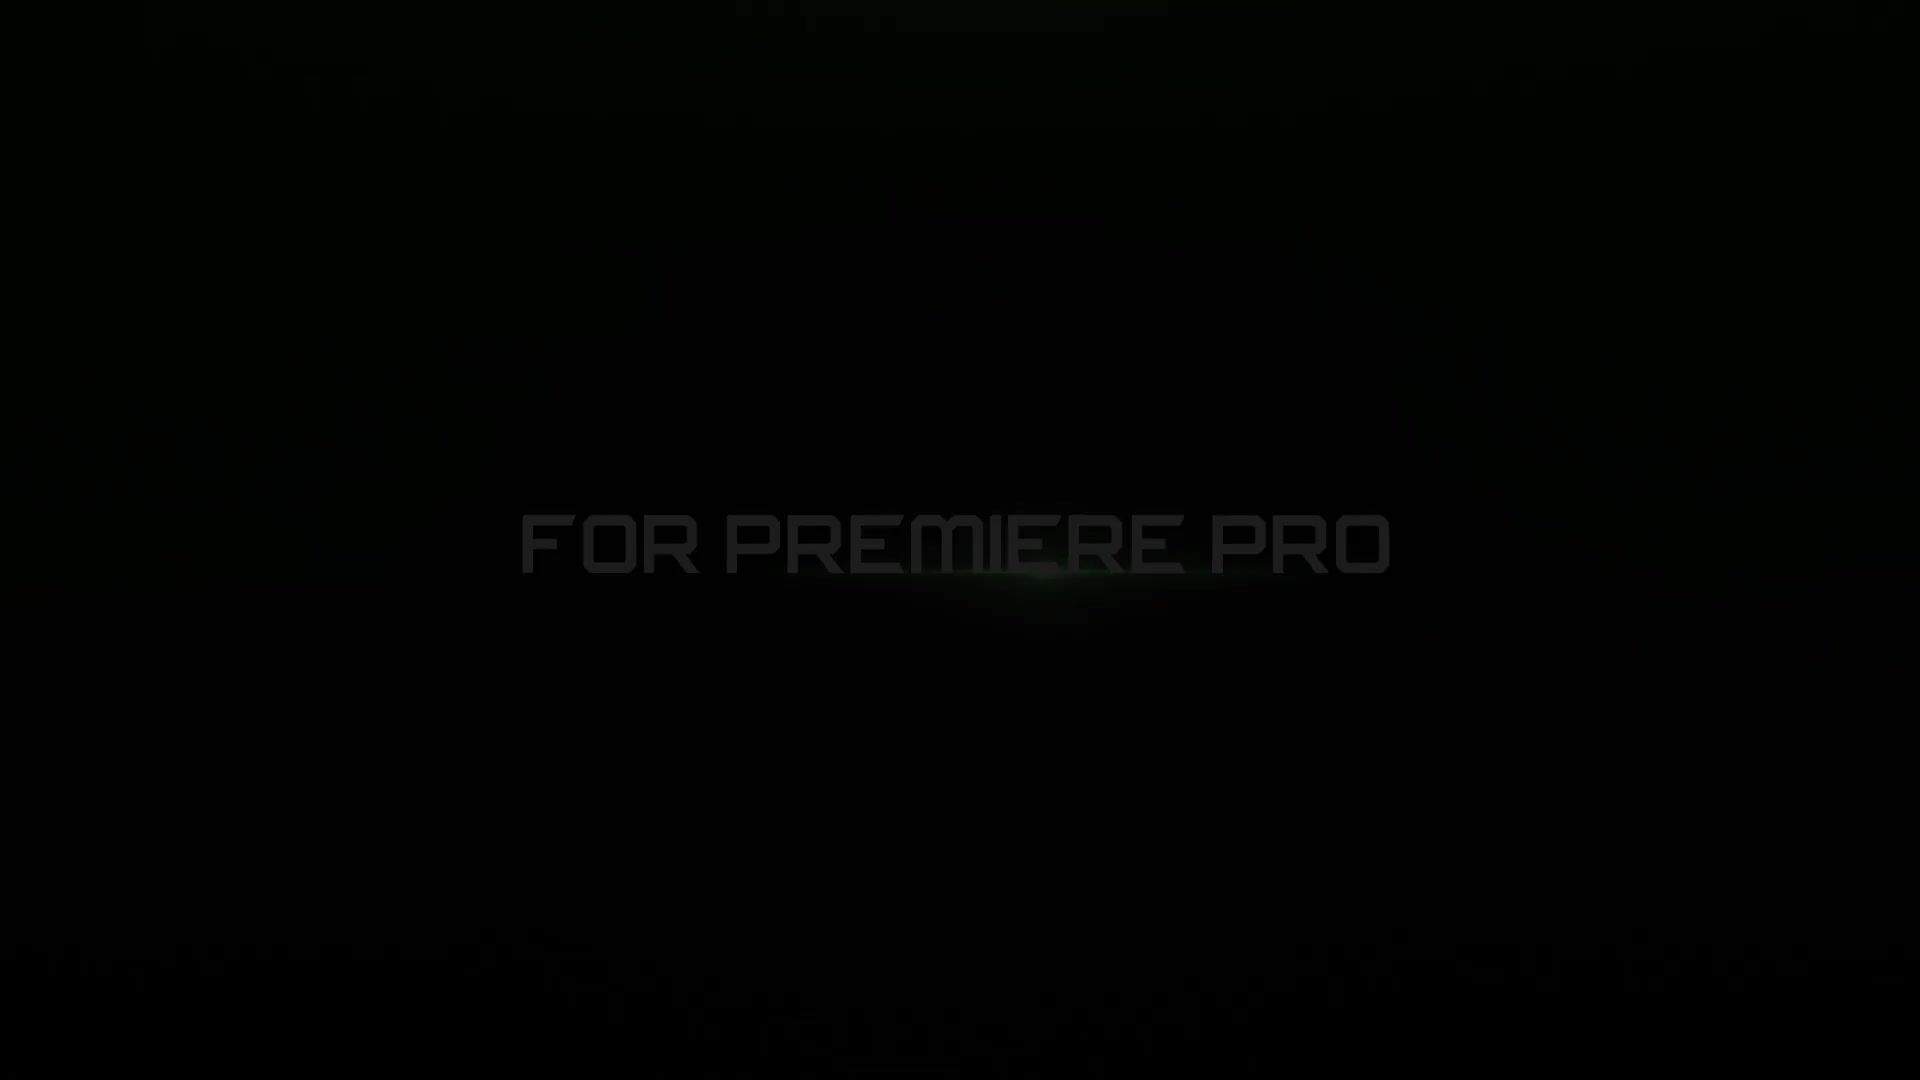 The Matrix Cinematic Titles Premiere Pro Videohive 24577419 Premiere Pro Image 4